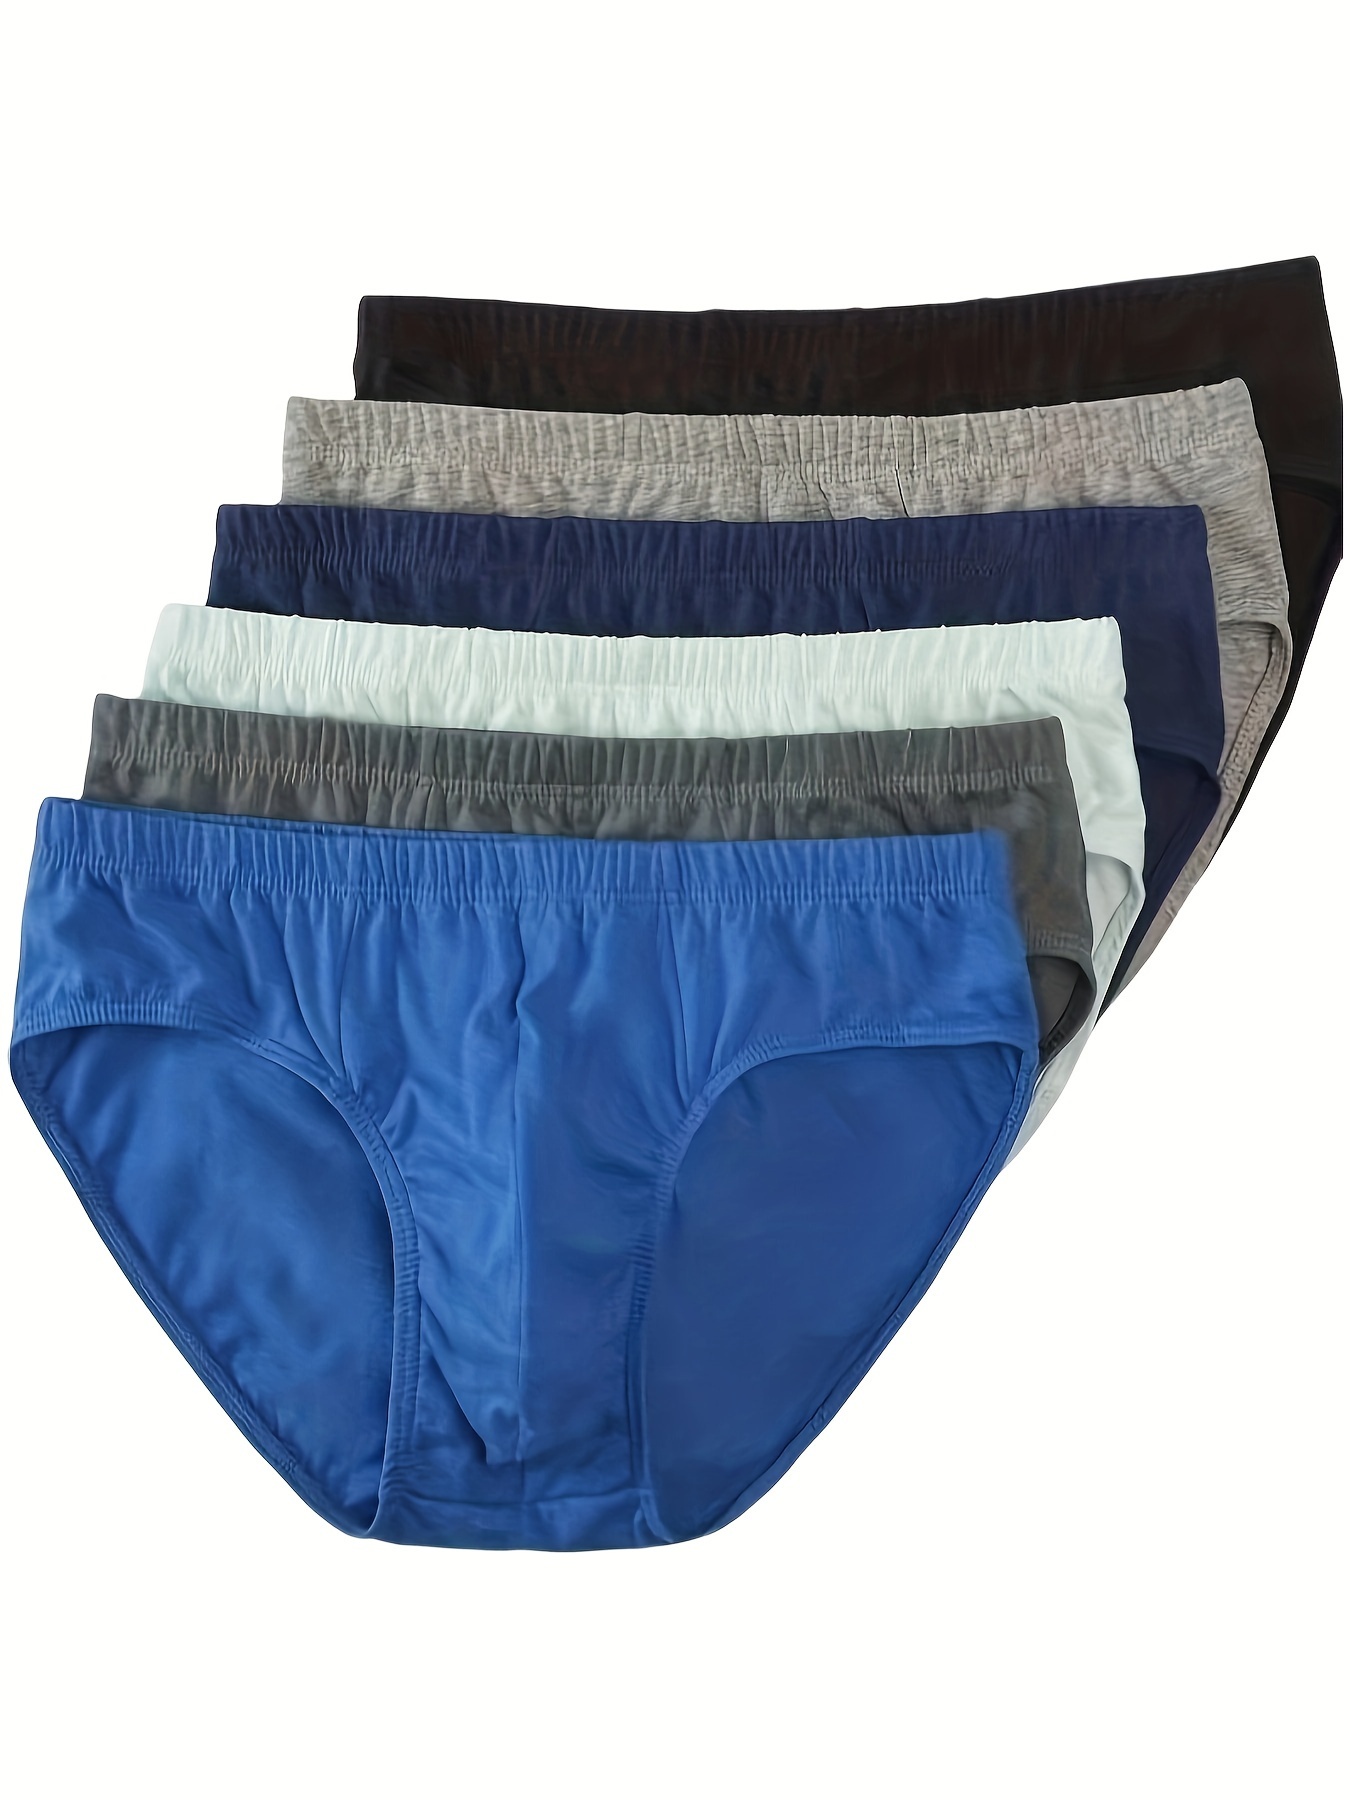 Looking for underwear that's très à la mode? The Jockey® 3PK Tonal